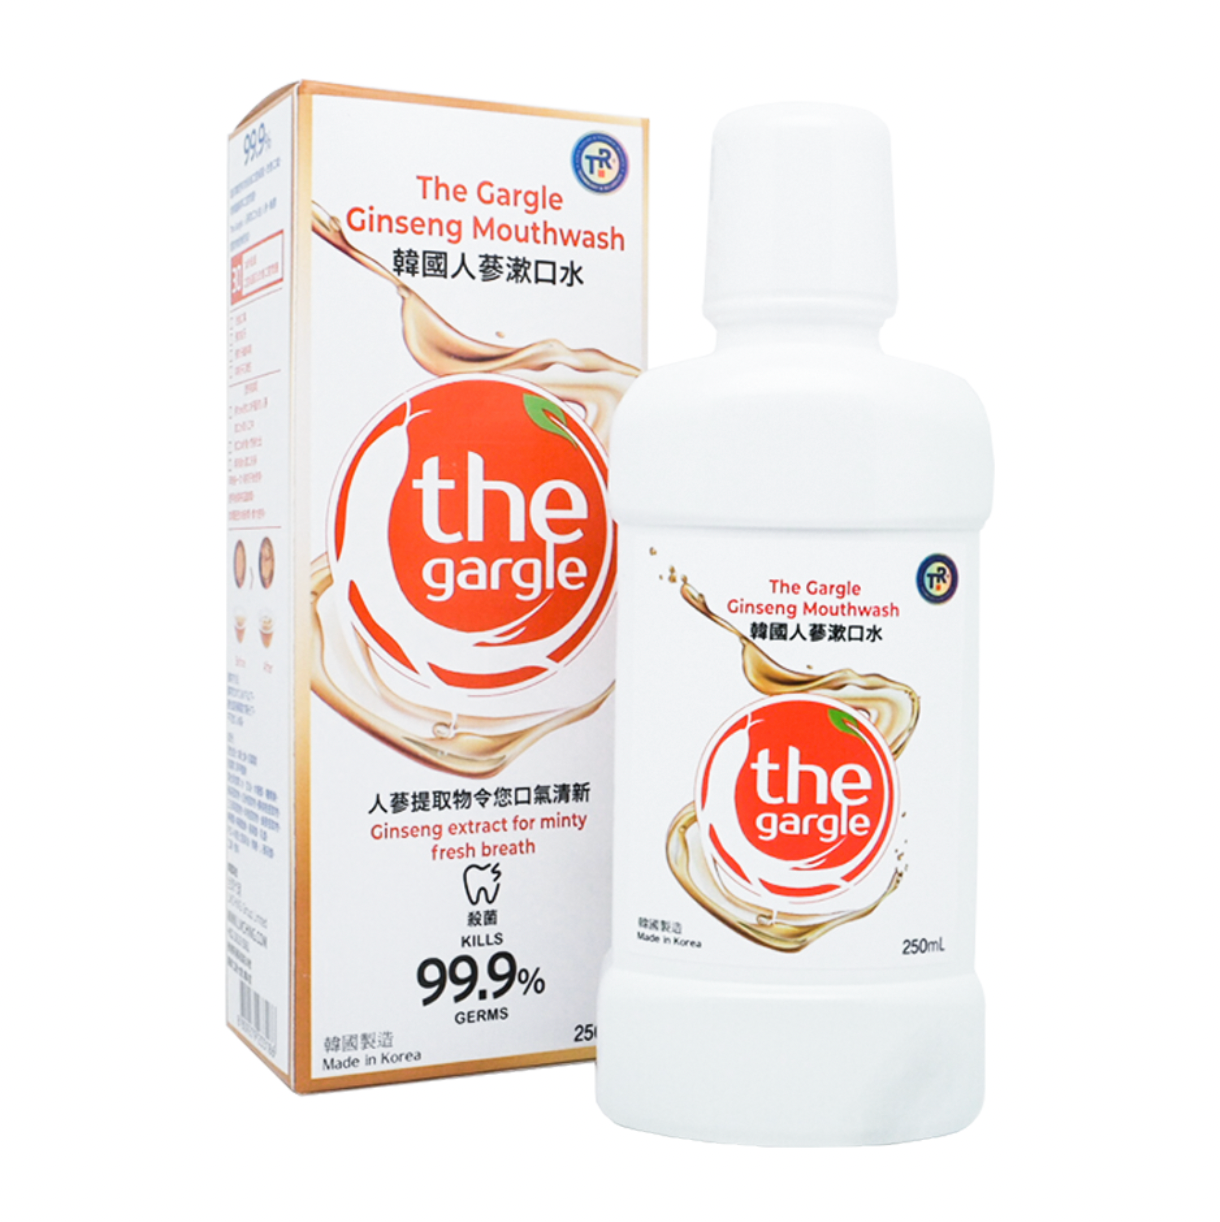 The Gargle معطر فم سائل معقم بنسبة 99.9% بنكهة الجينسنغ الكوري سعة 250 مل